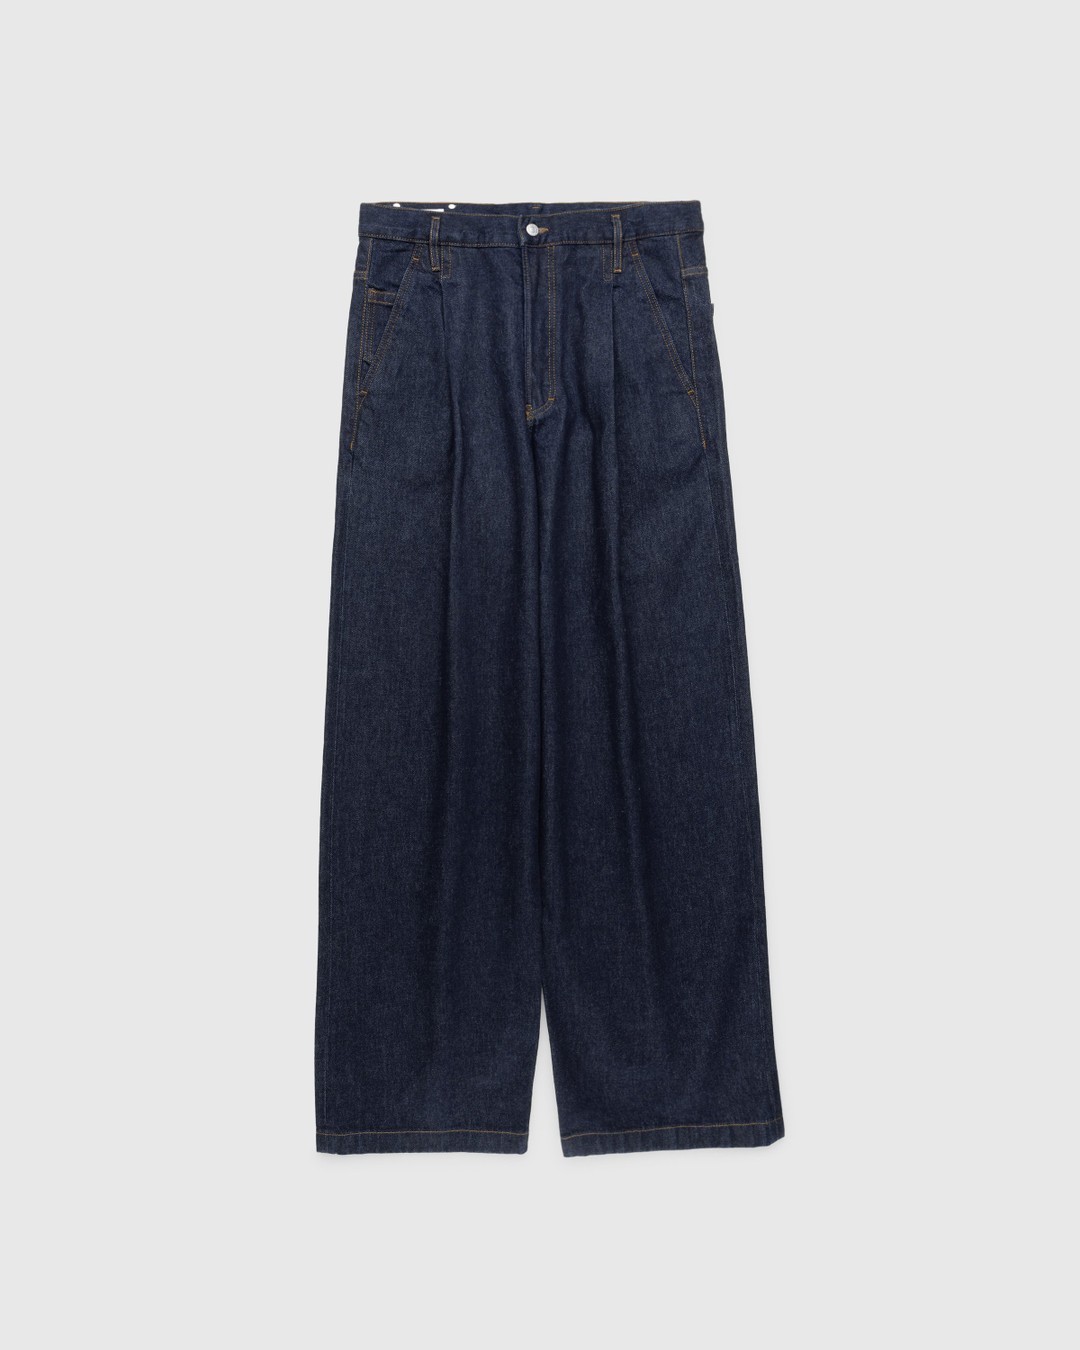 Dries van Noten – Penning Pants Indigo - Pants - Blue - Image 1